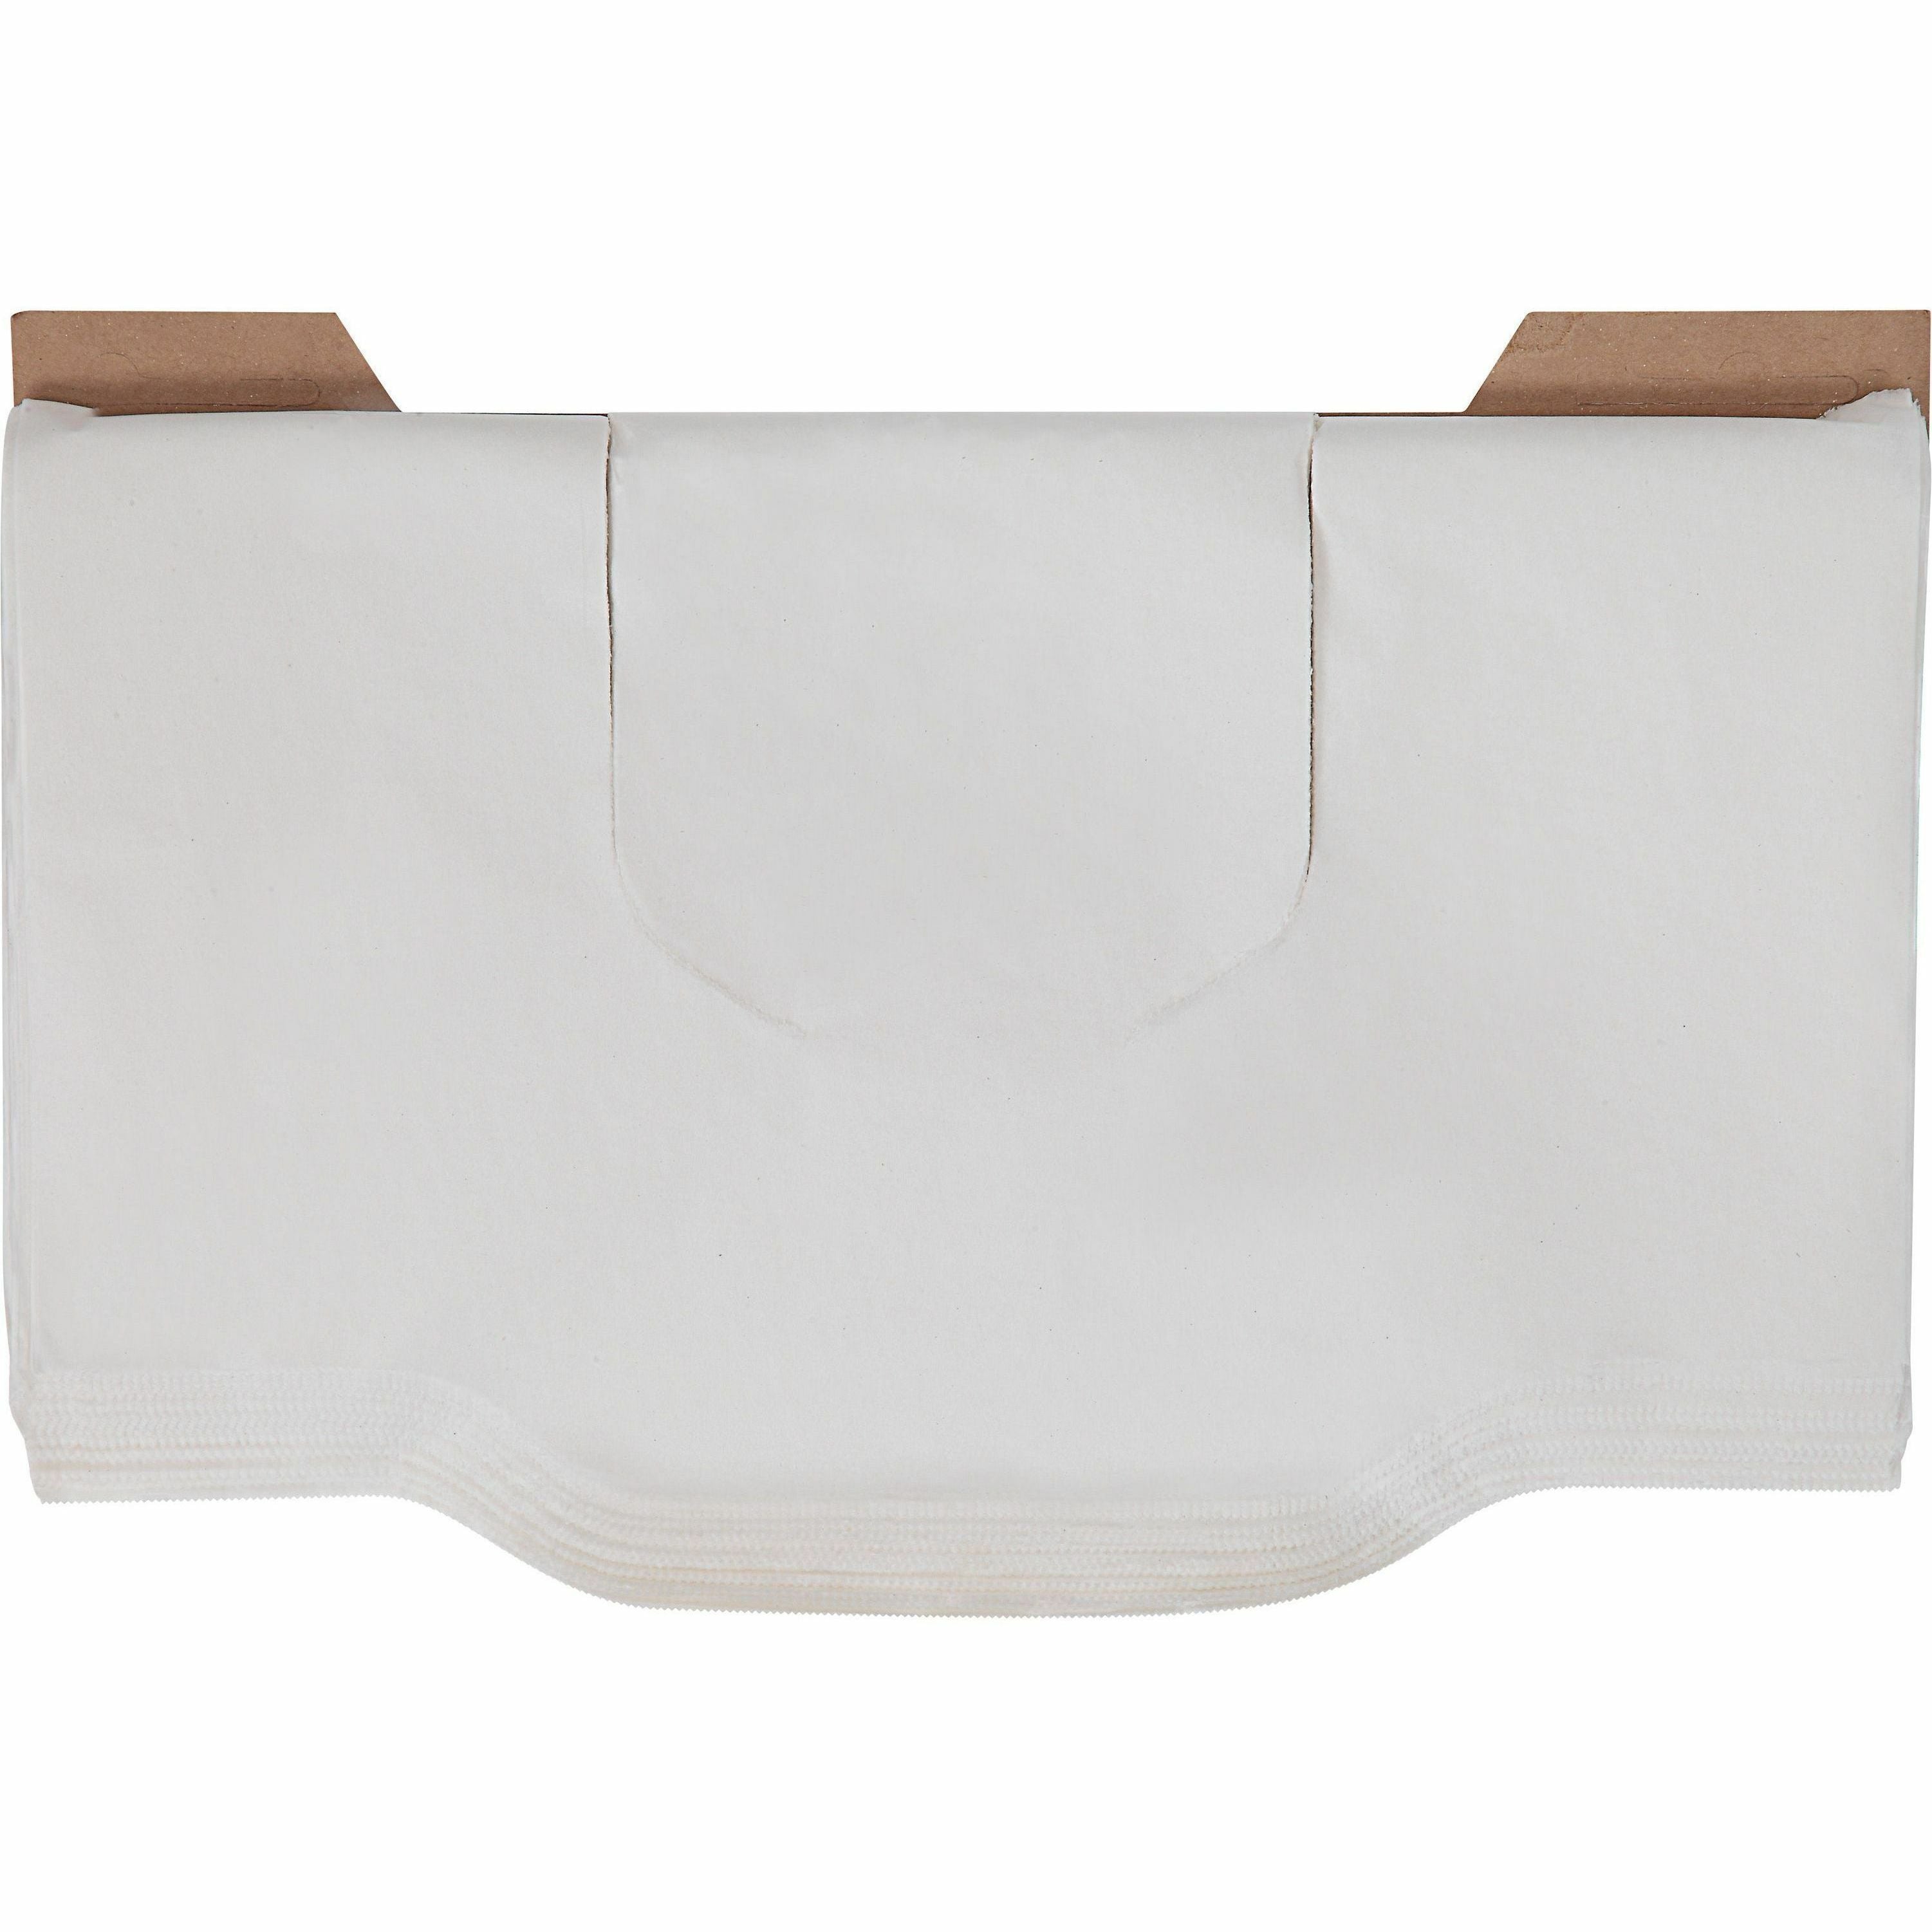 genuine-joe-quarter-fold-toilet-seat-covers-quarter-fold-for-toilet-125-pack-24-carton-virgin-paper-white_gjo10154 - 2